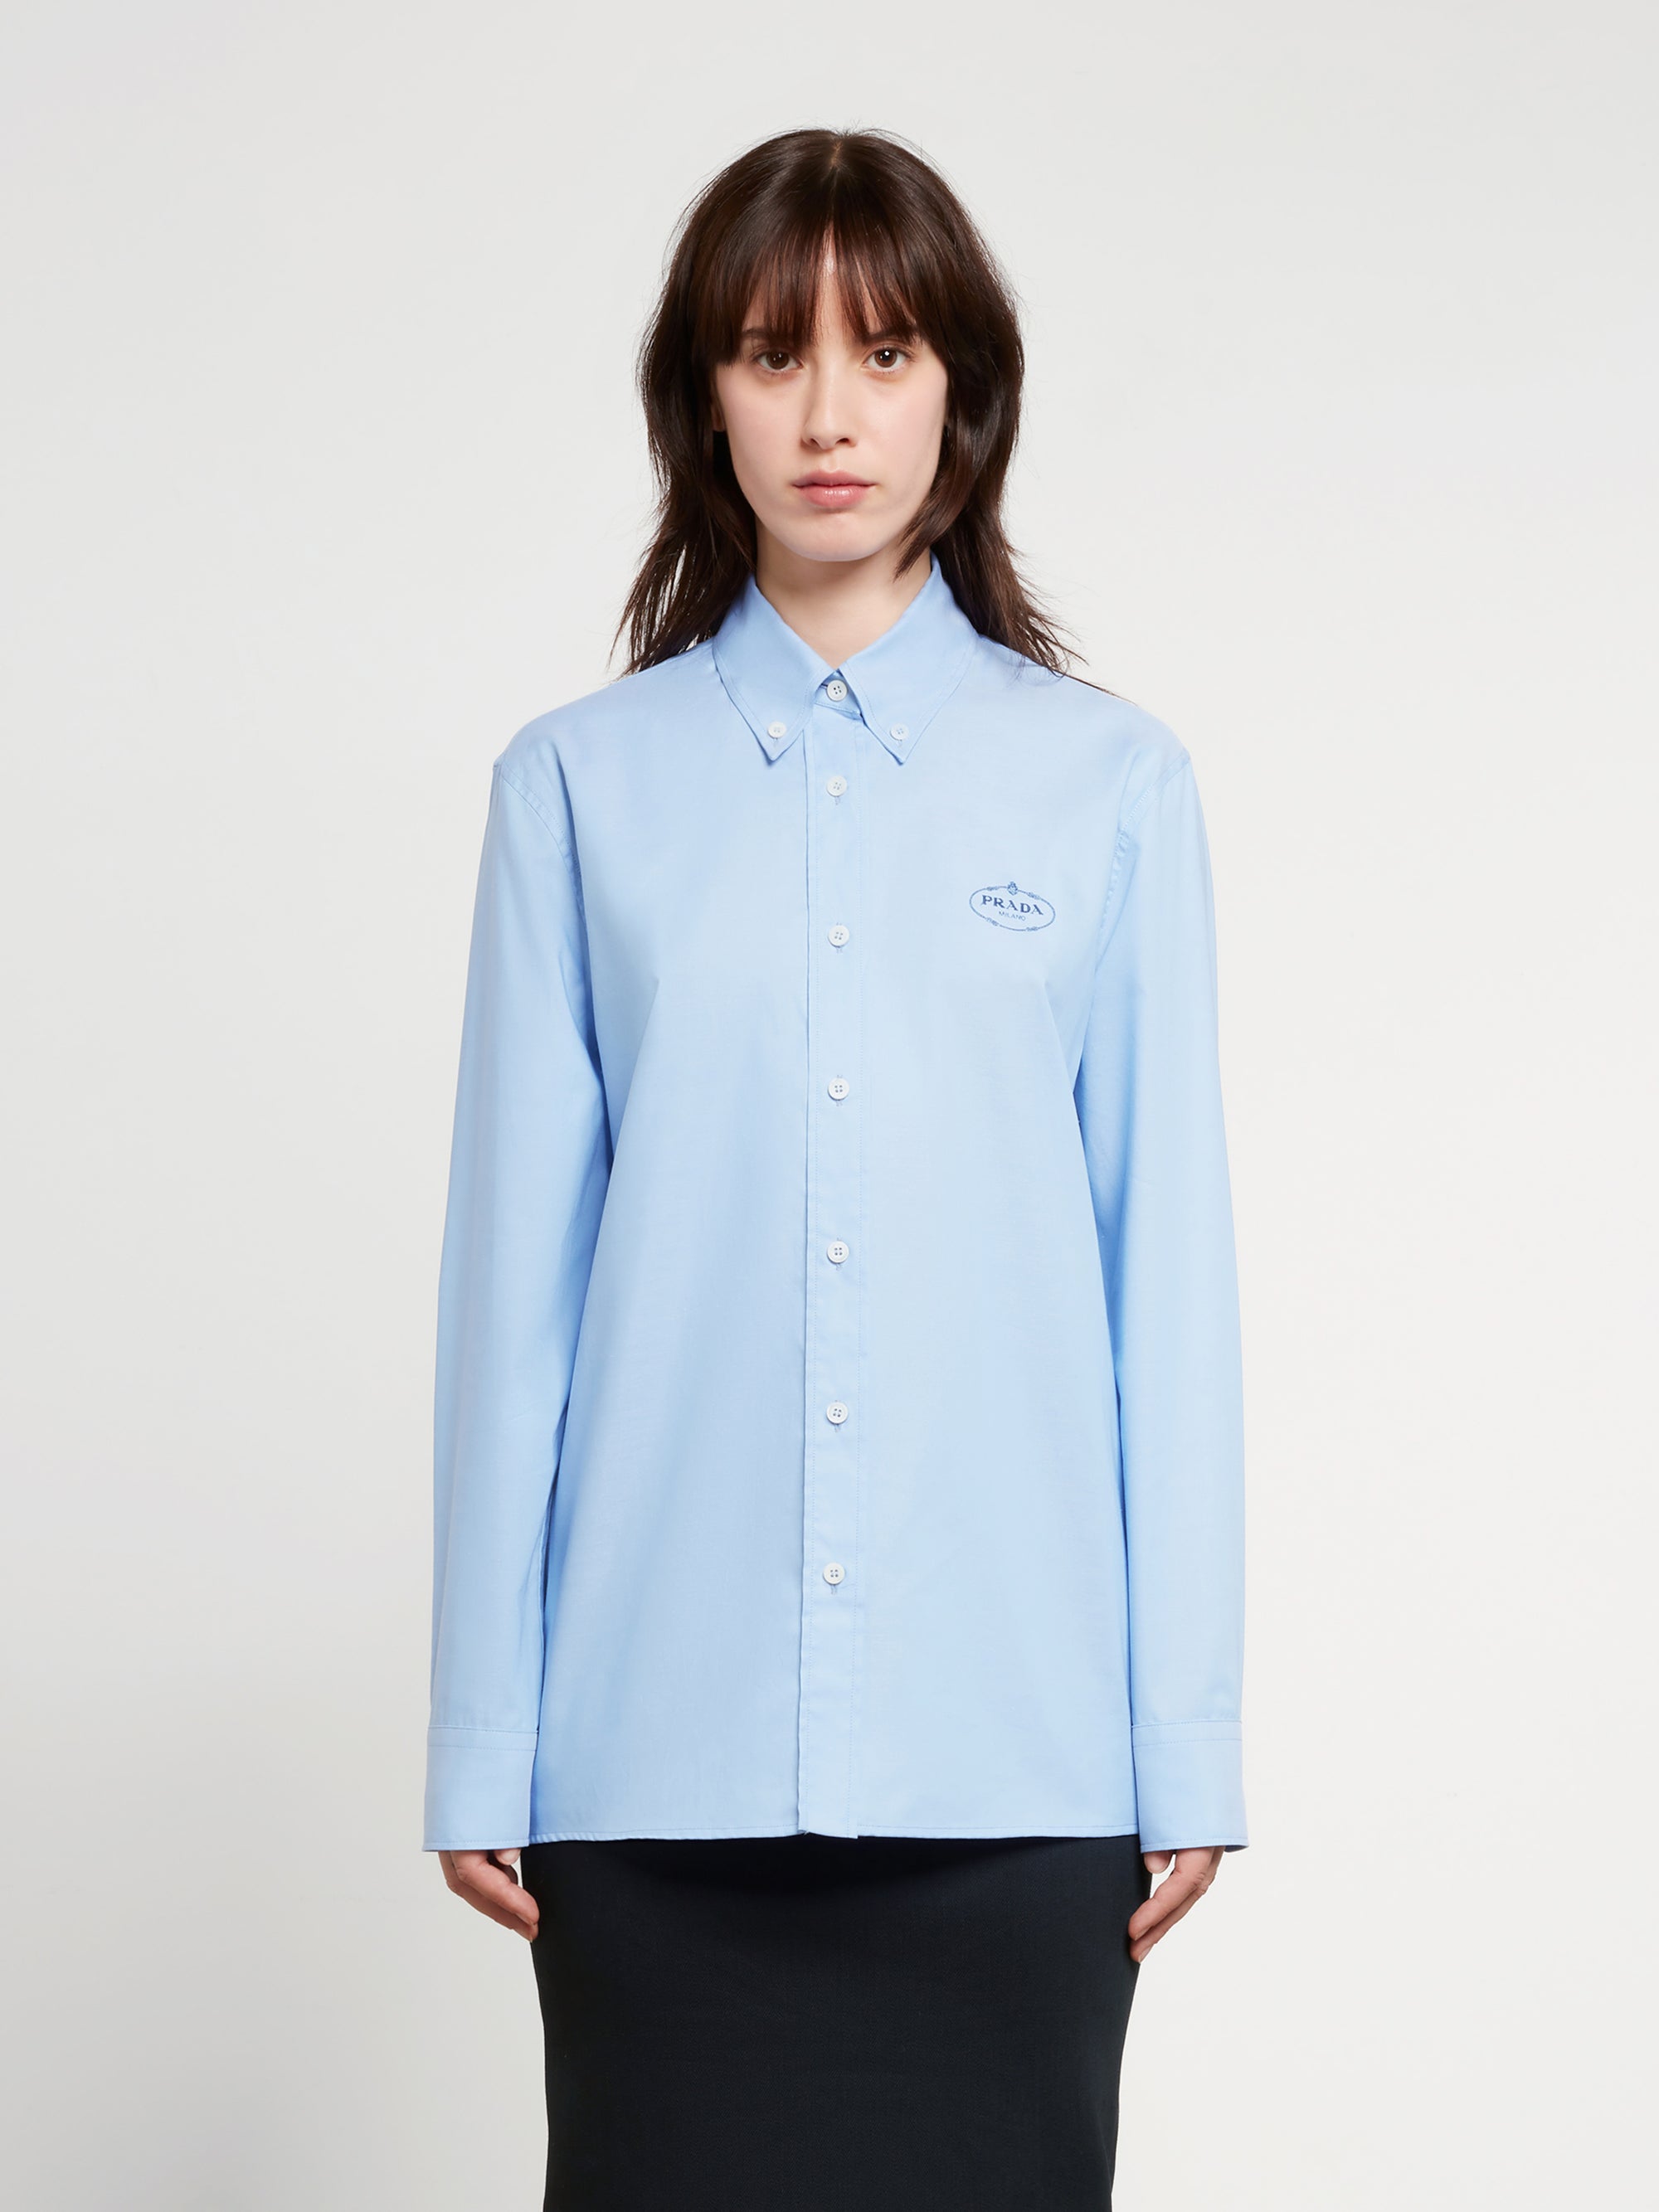 Prada - Women's Oxford Cotton Shirt - (Light Blue)